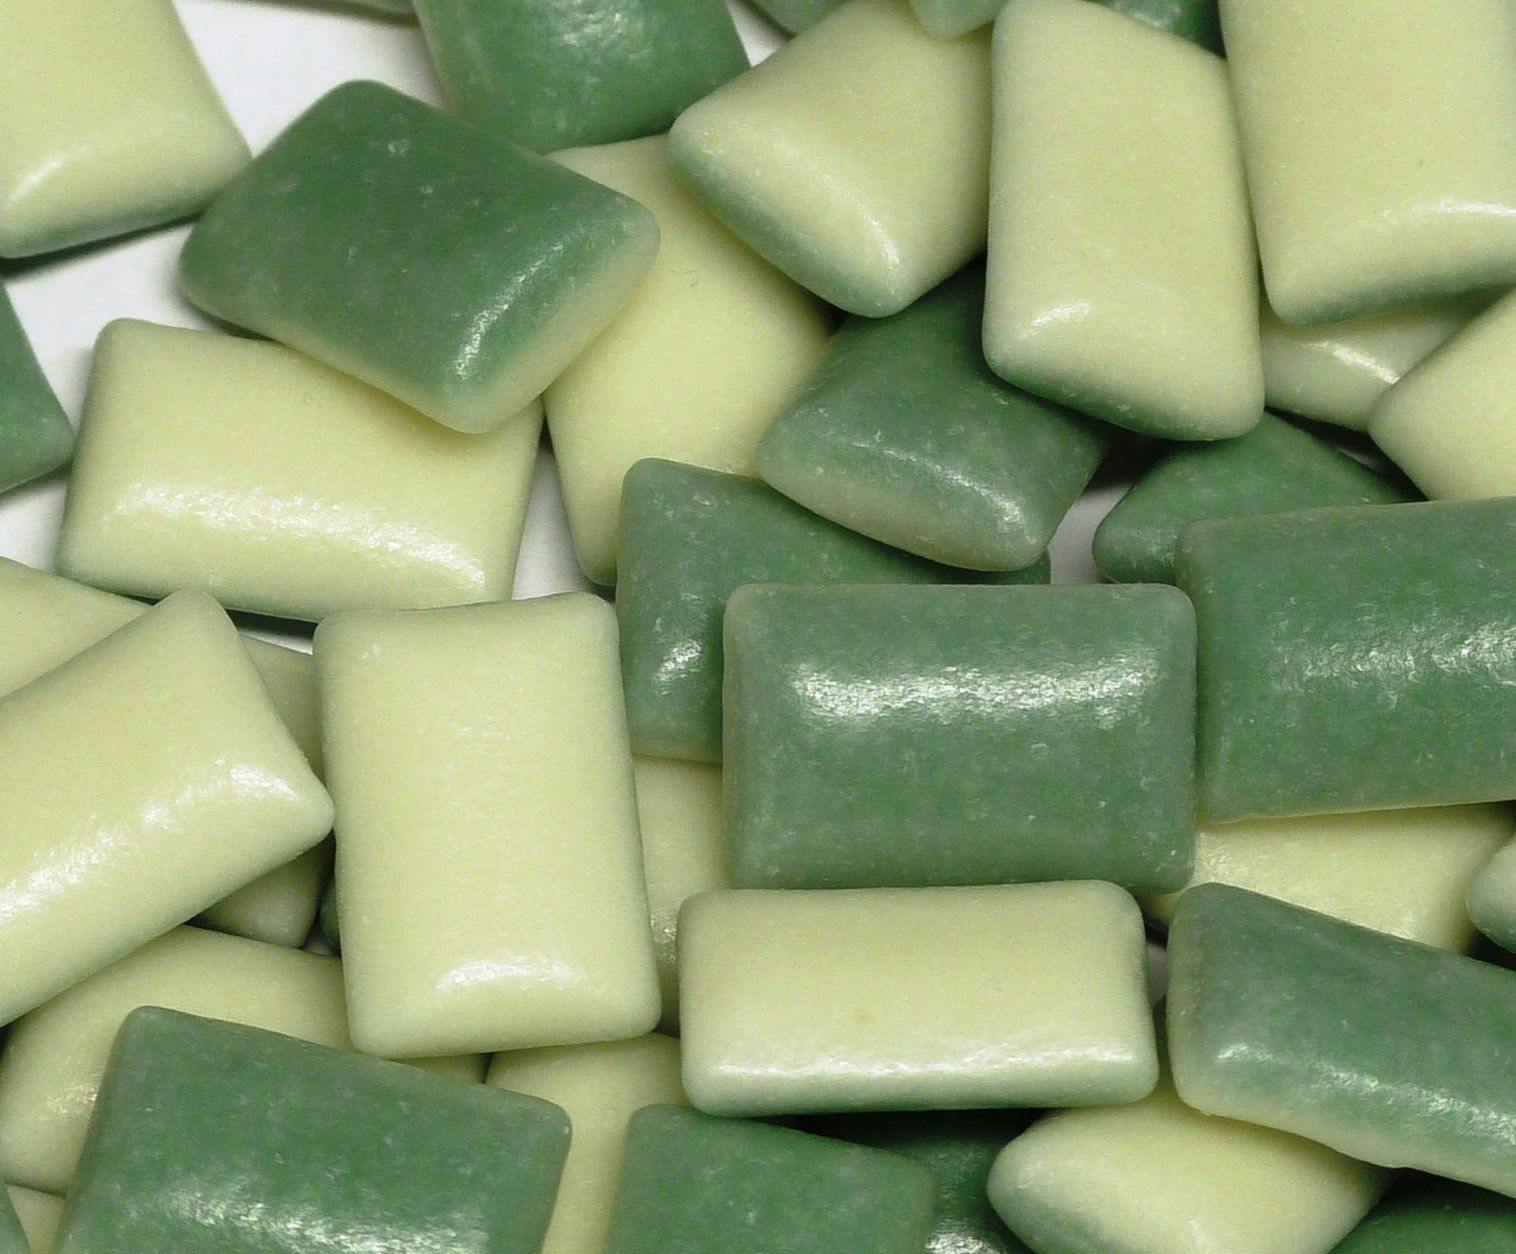 New Isomalt Translucent Coating Technology Targets Chewing Gum